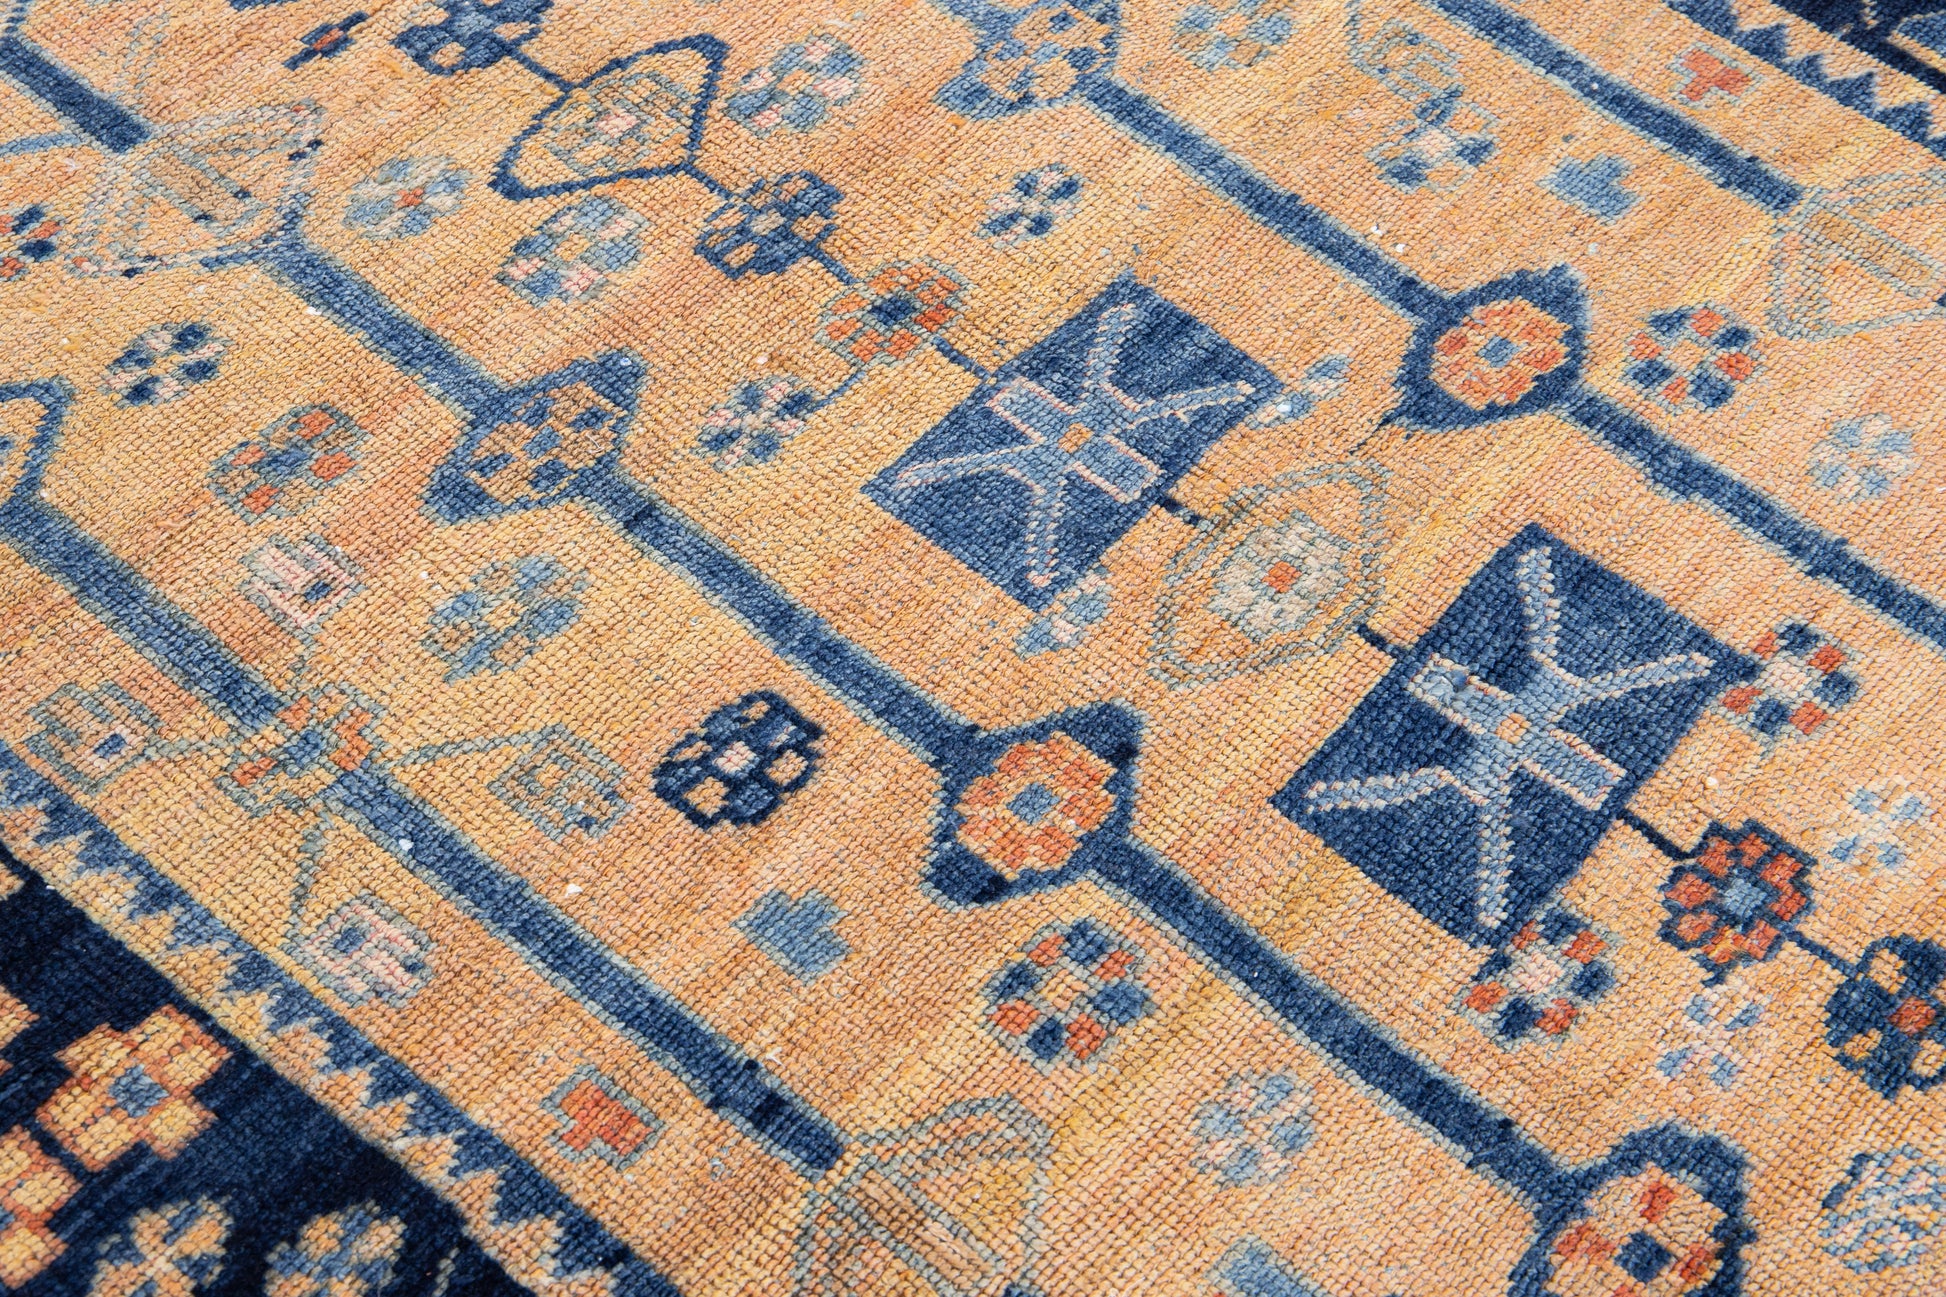 Beautiful handmade blue and beige wool rug